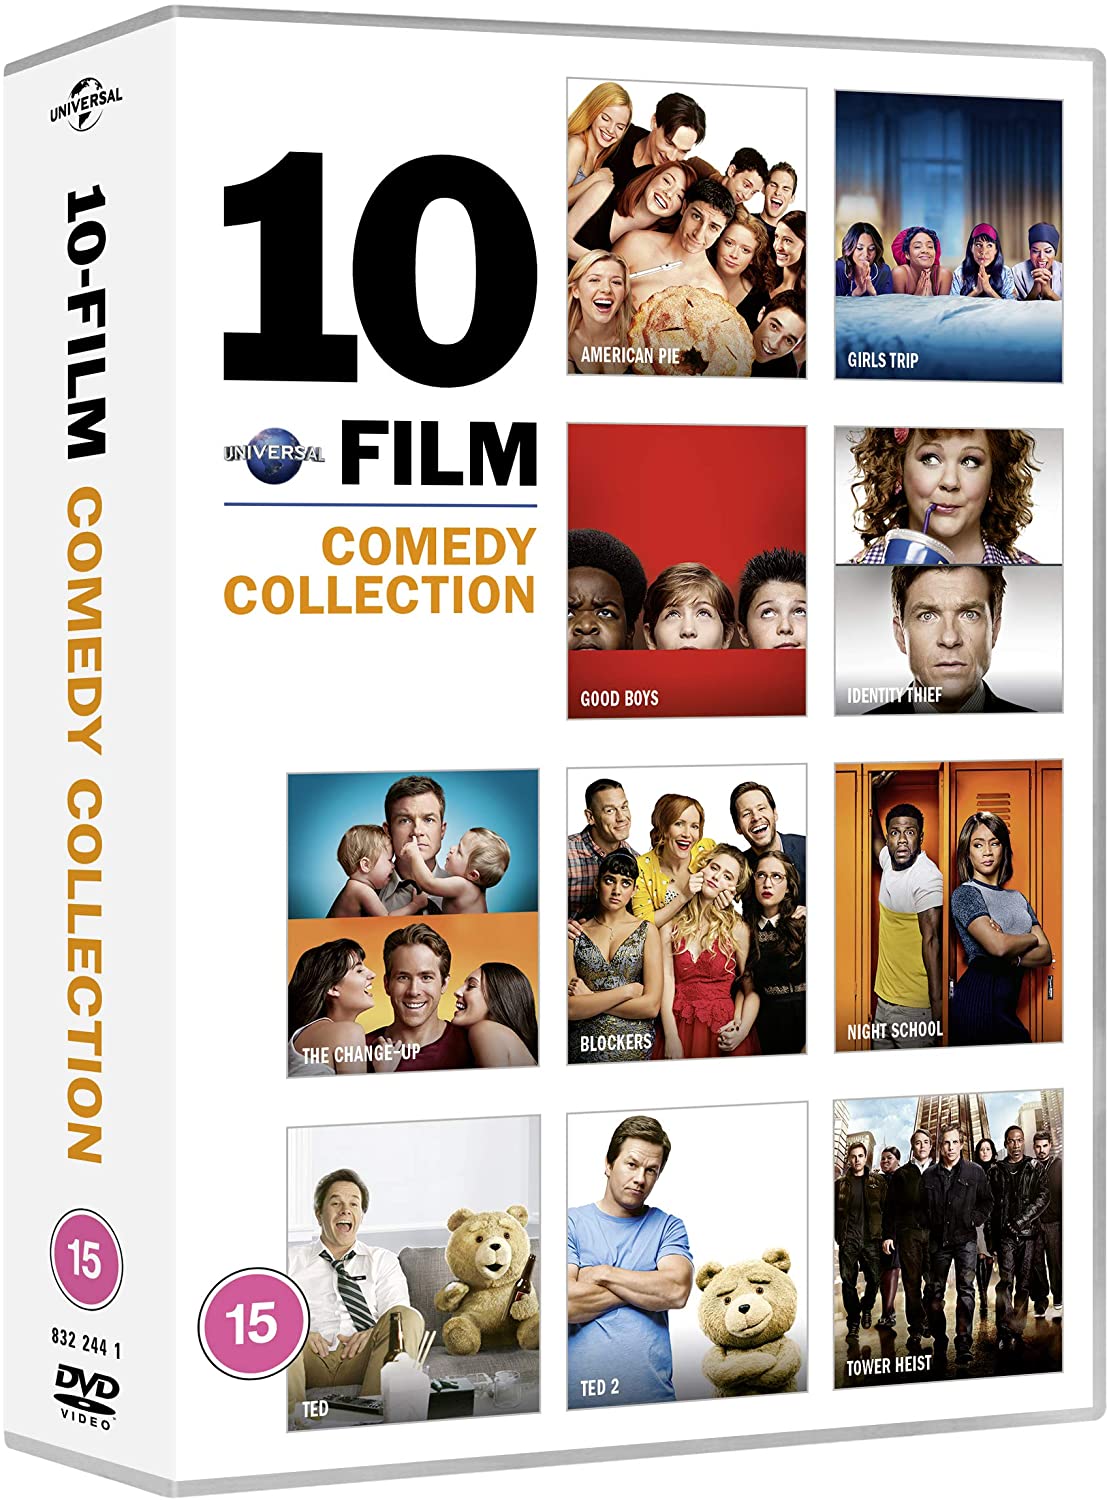 Universal 10 Comedy Film Collection (DVD) – Warner Bros. Shop - UK